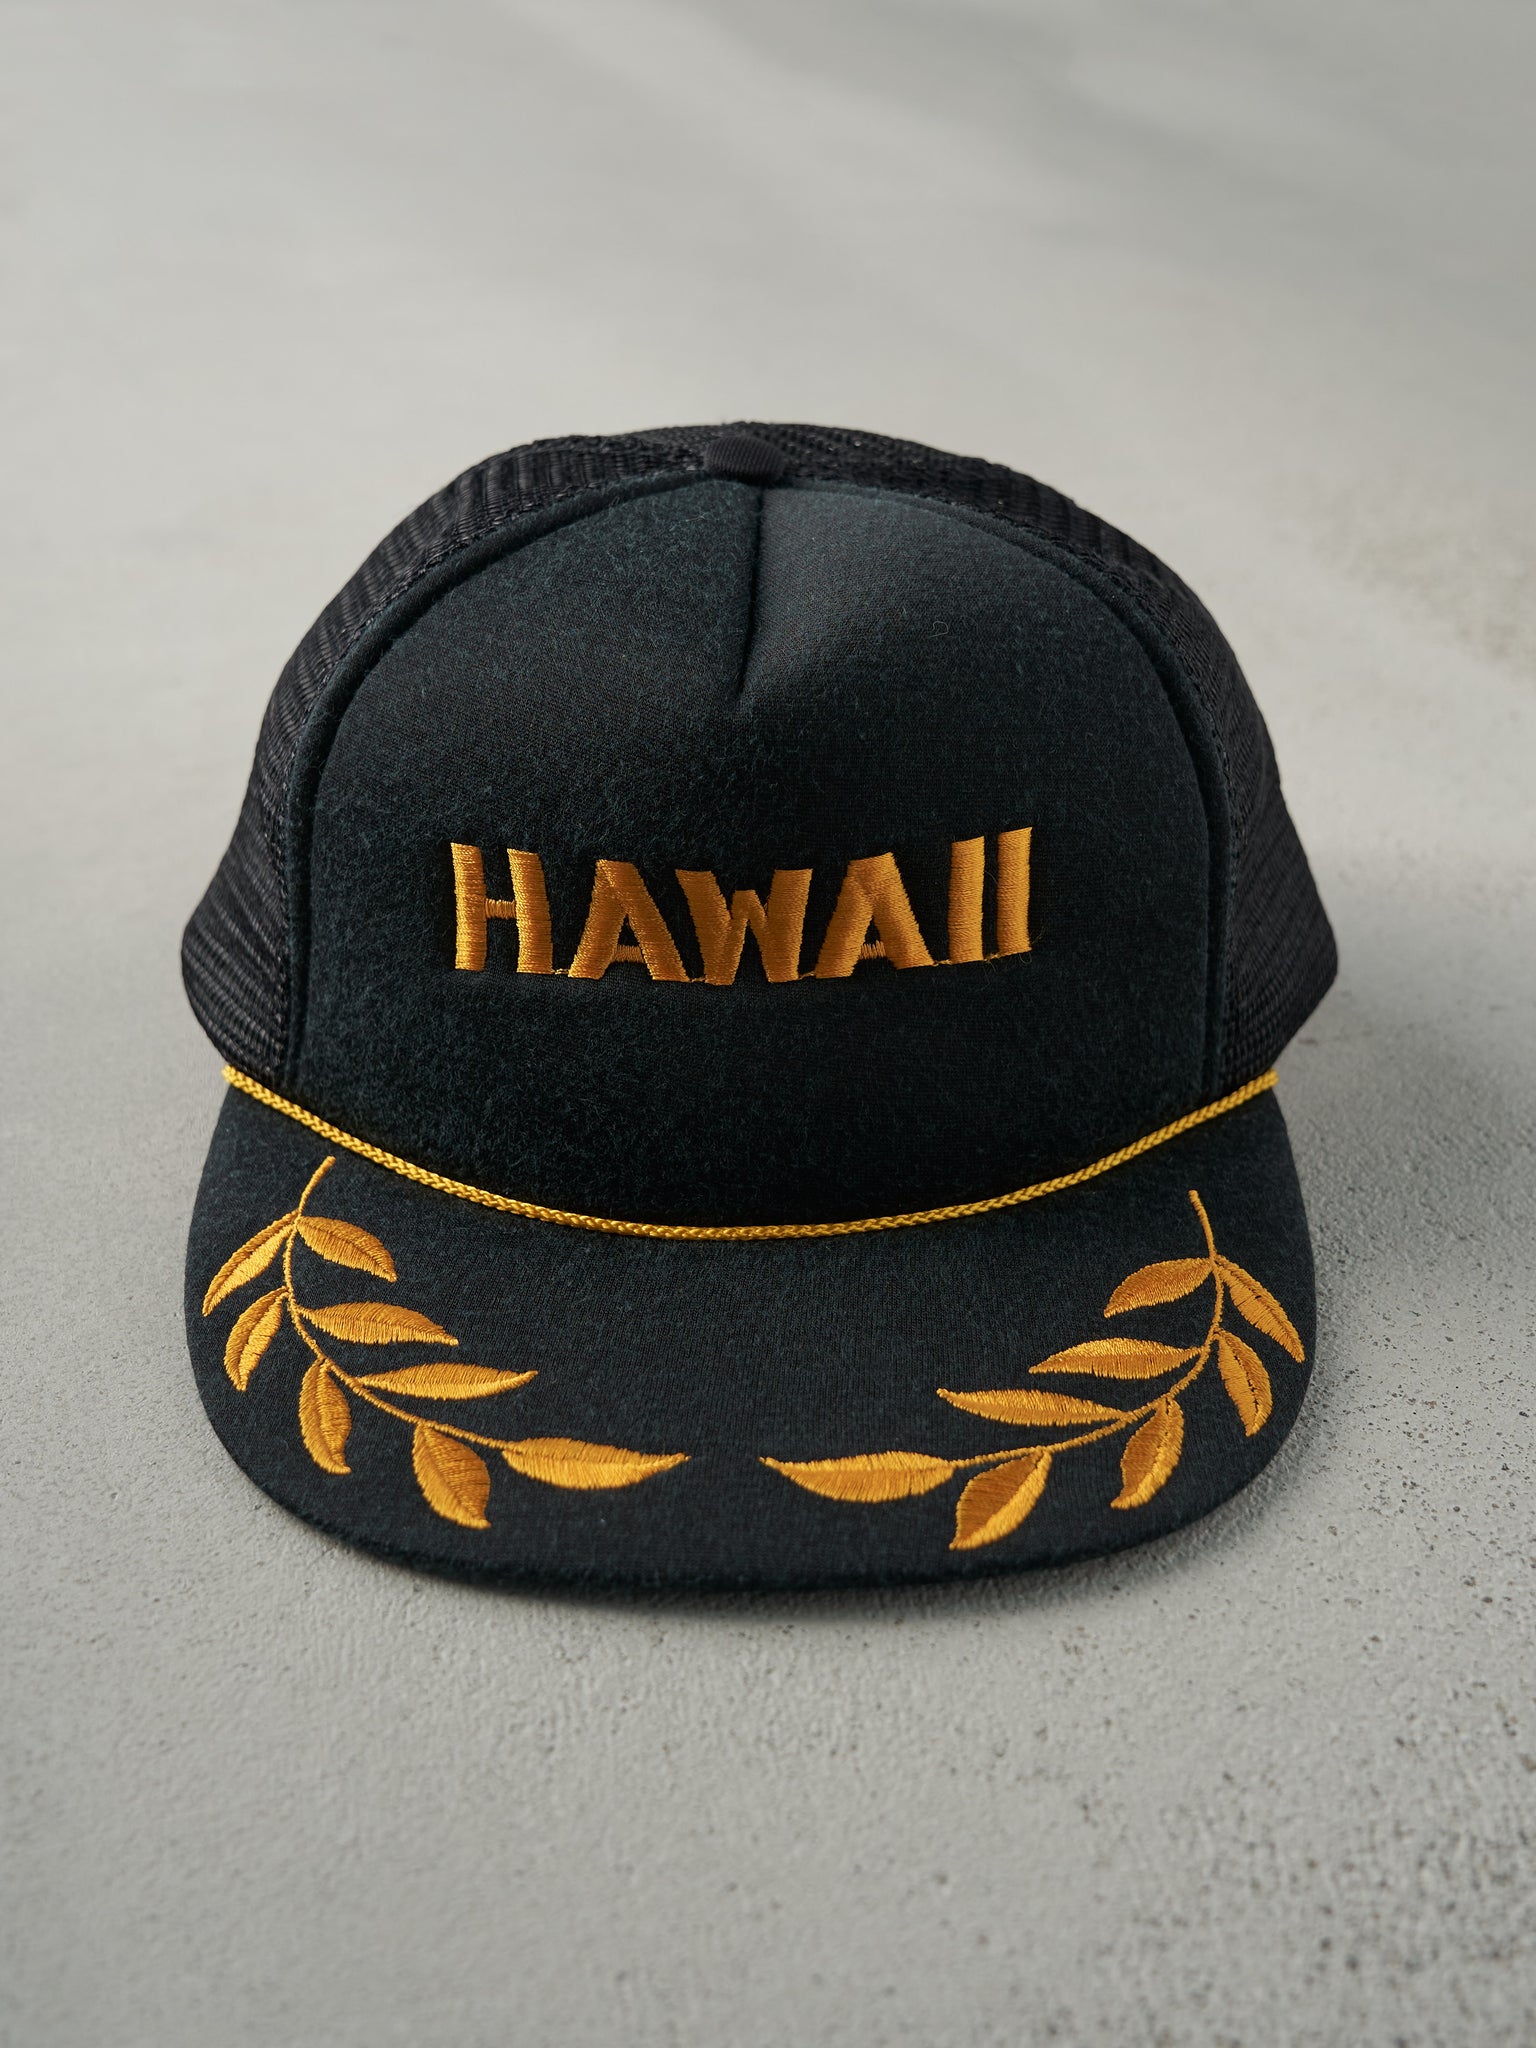 Vintage 80s Black Hawaii Embroidered Foam Trucker Hat